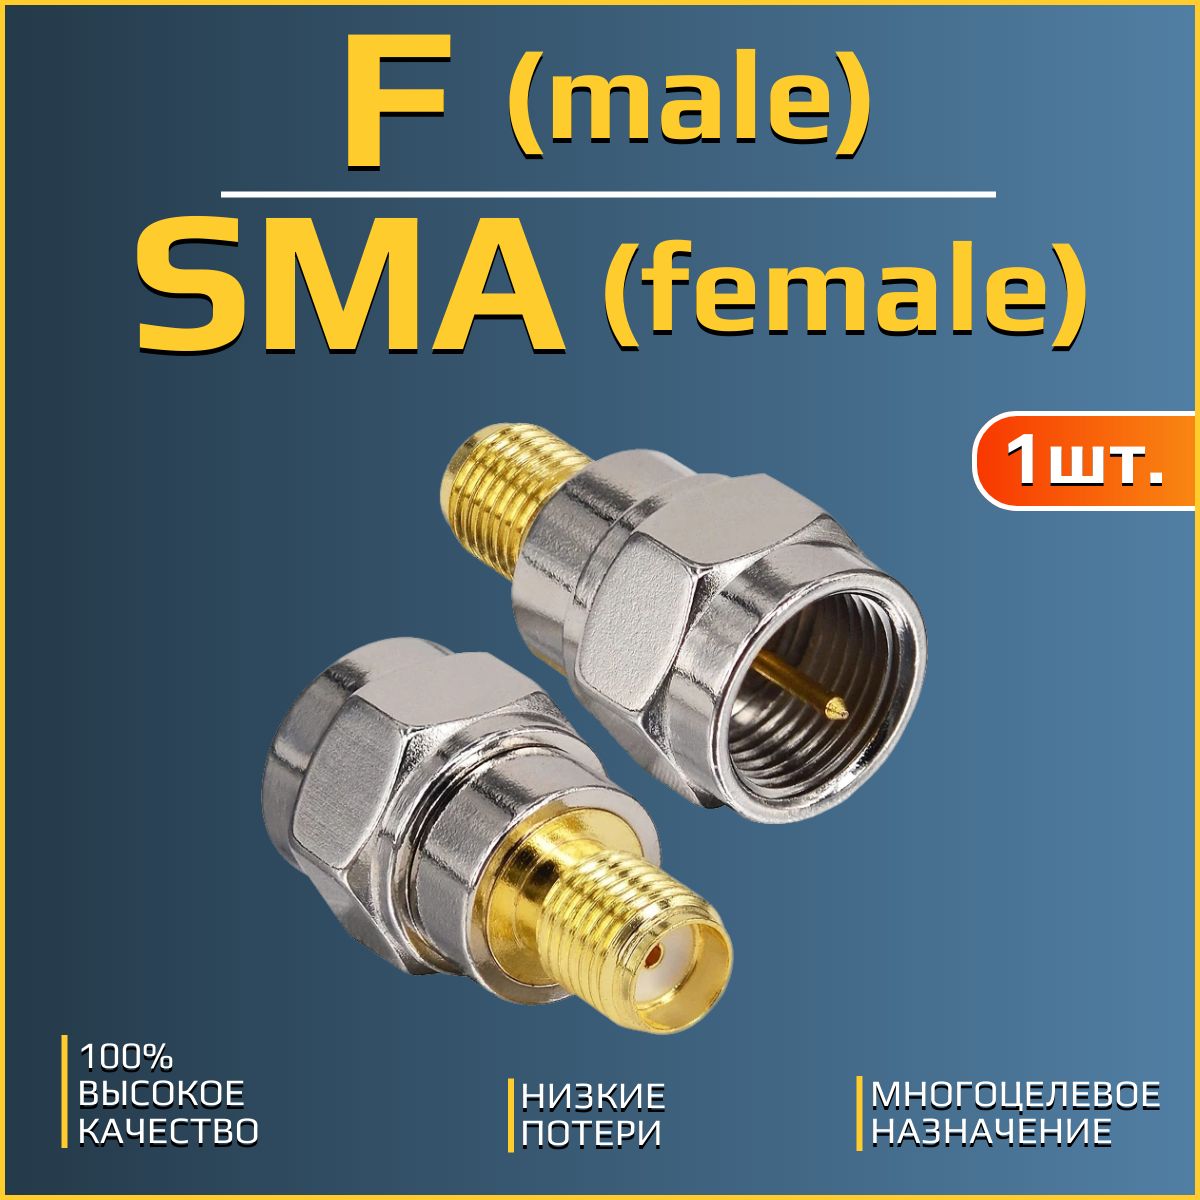 ПереходникF-male,SMA-female